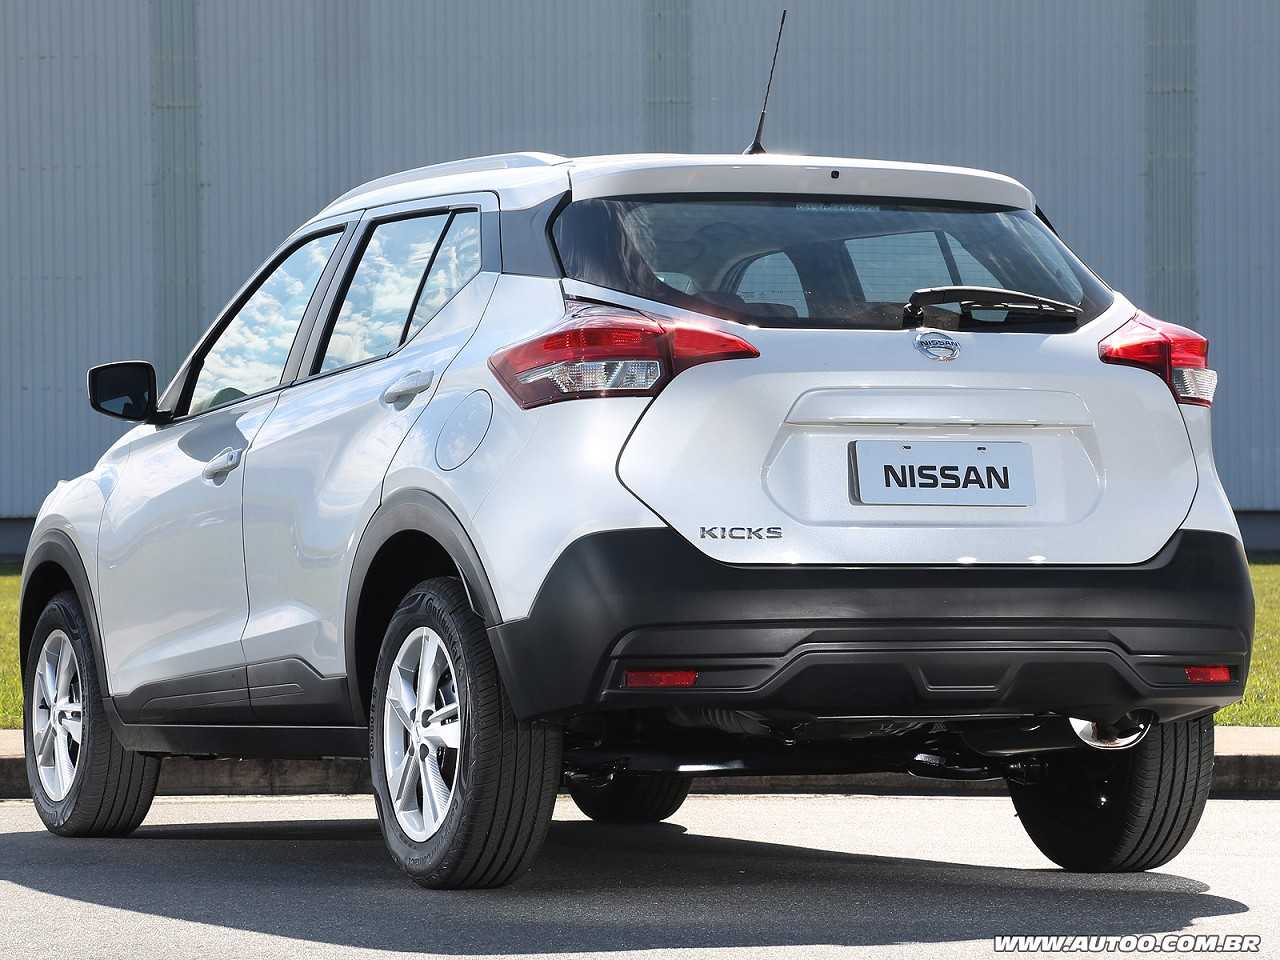 NissanKicks 2018 - ngulo traseiro